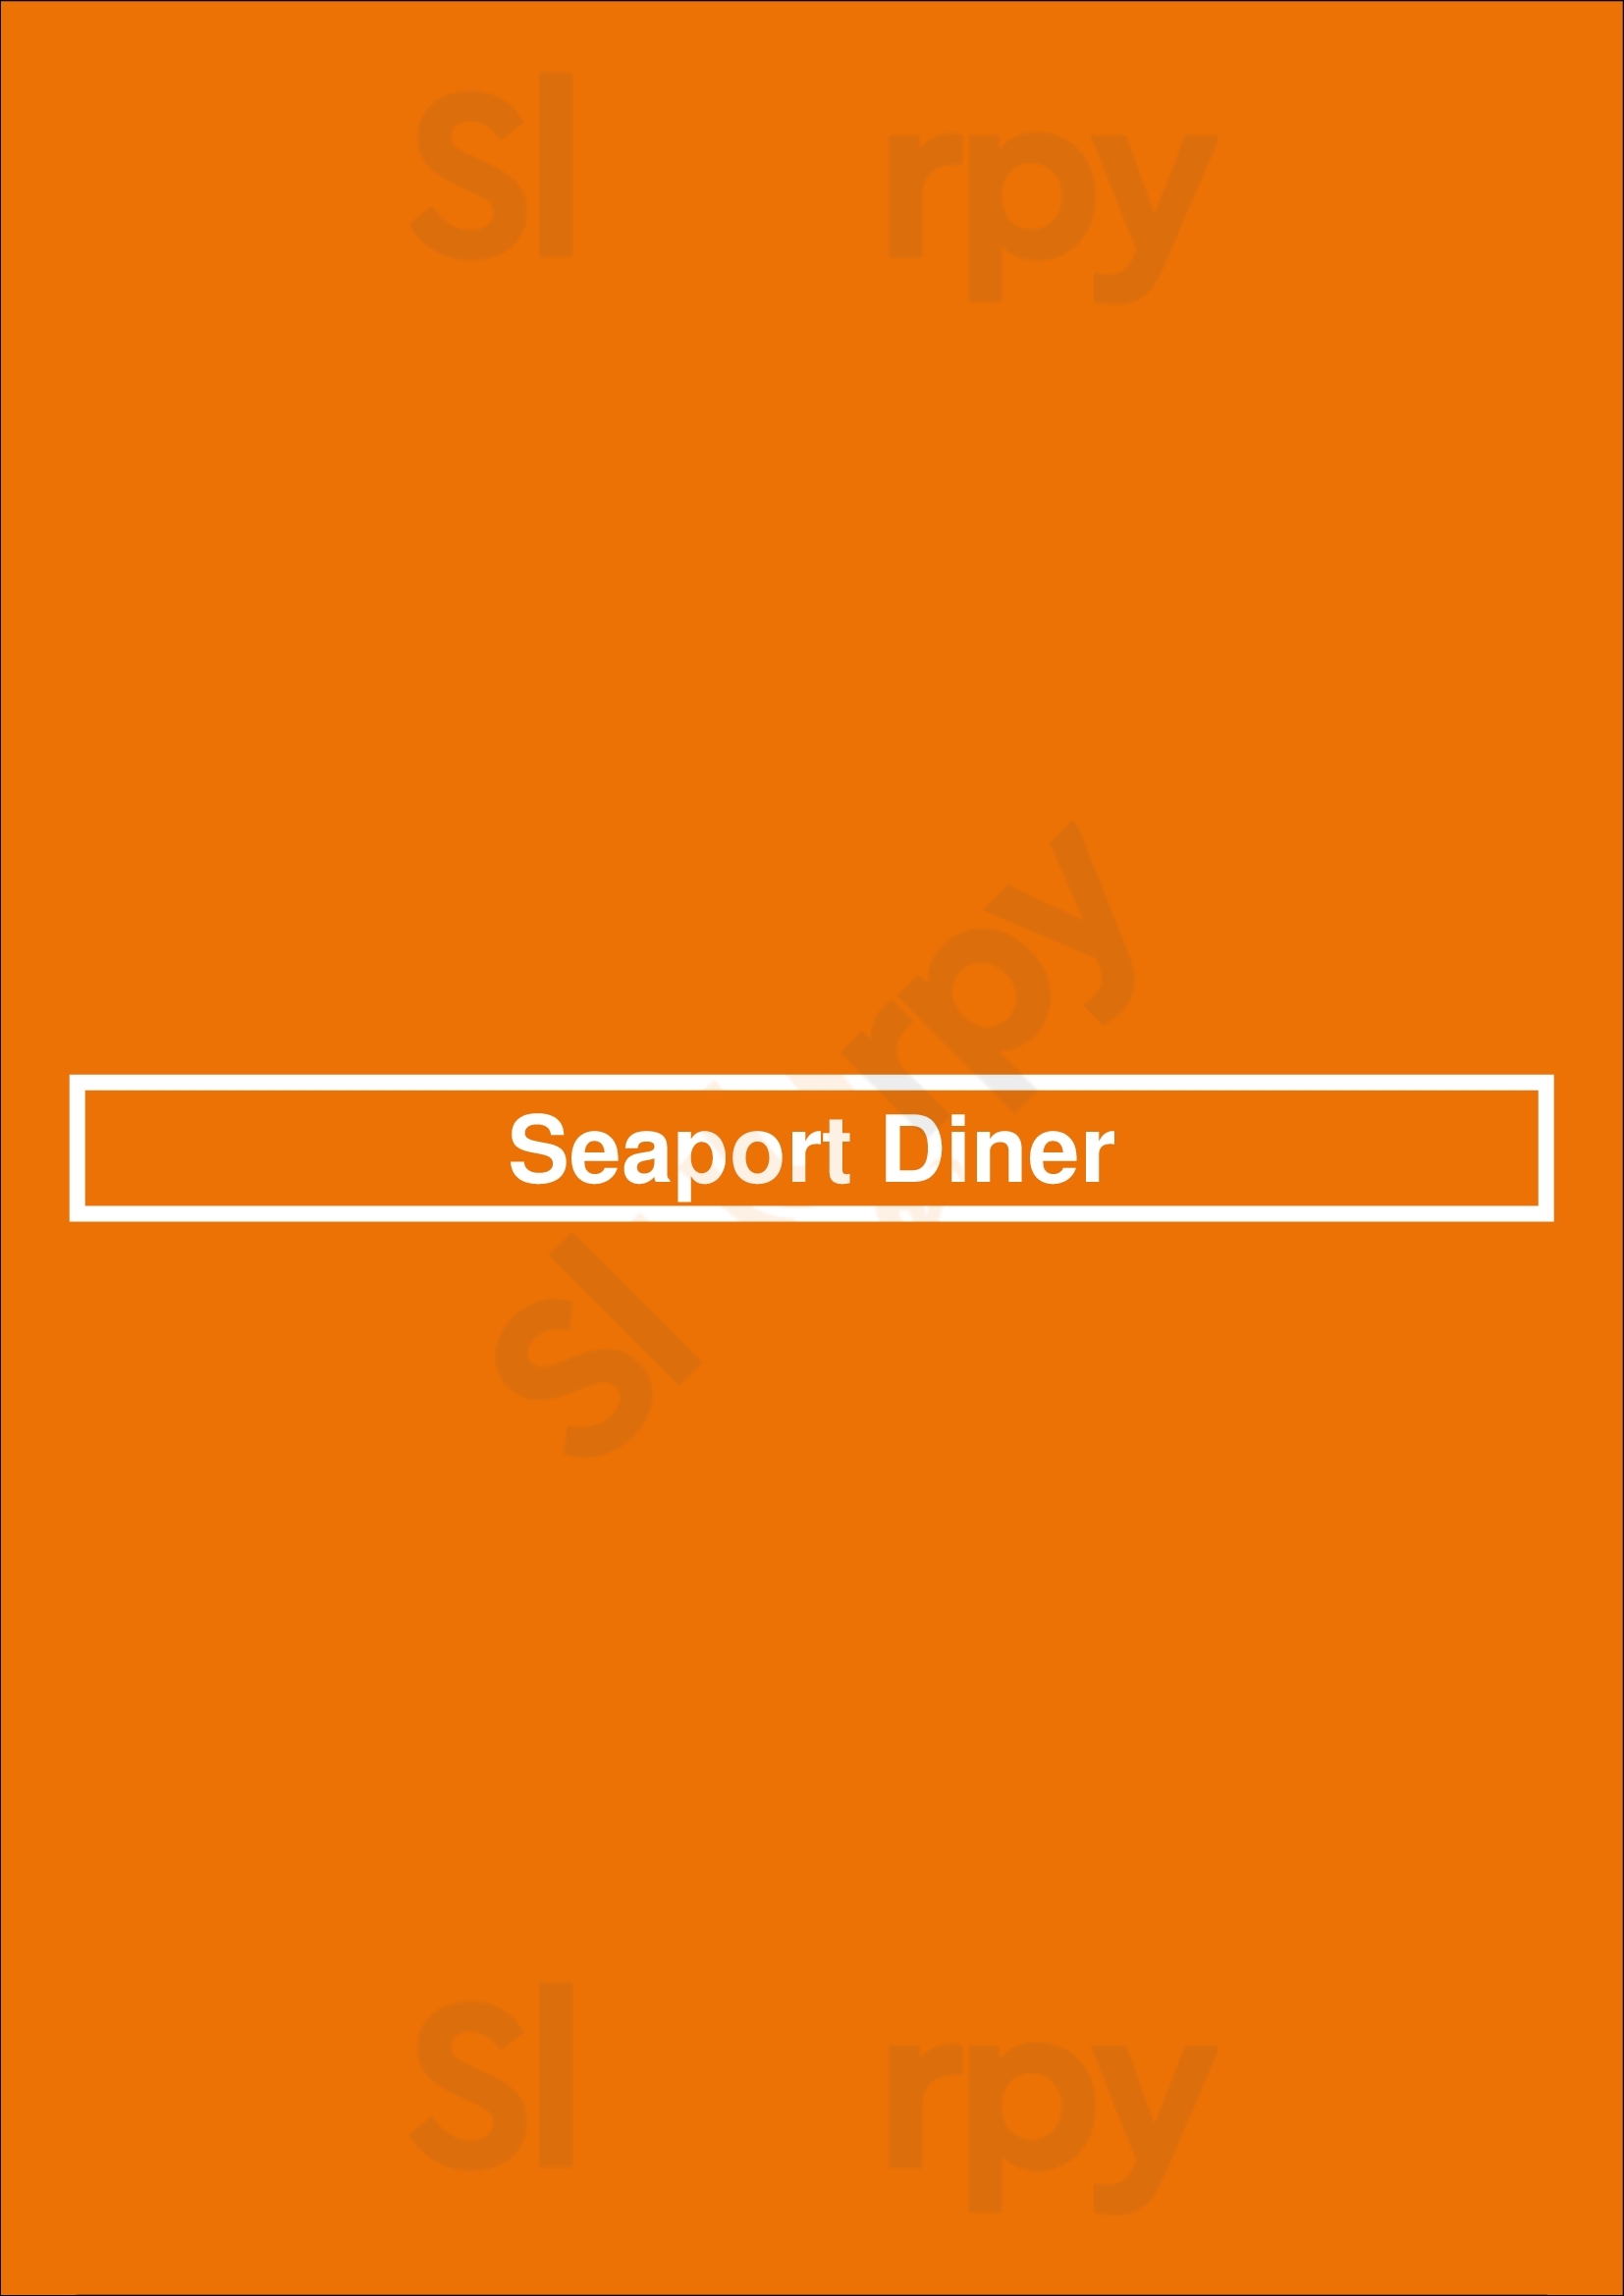 Seaport Diner Elizabeth Menu - 1